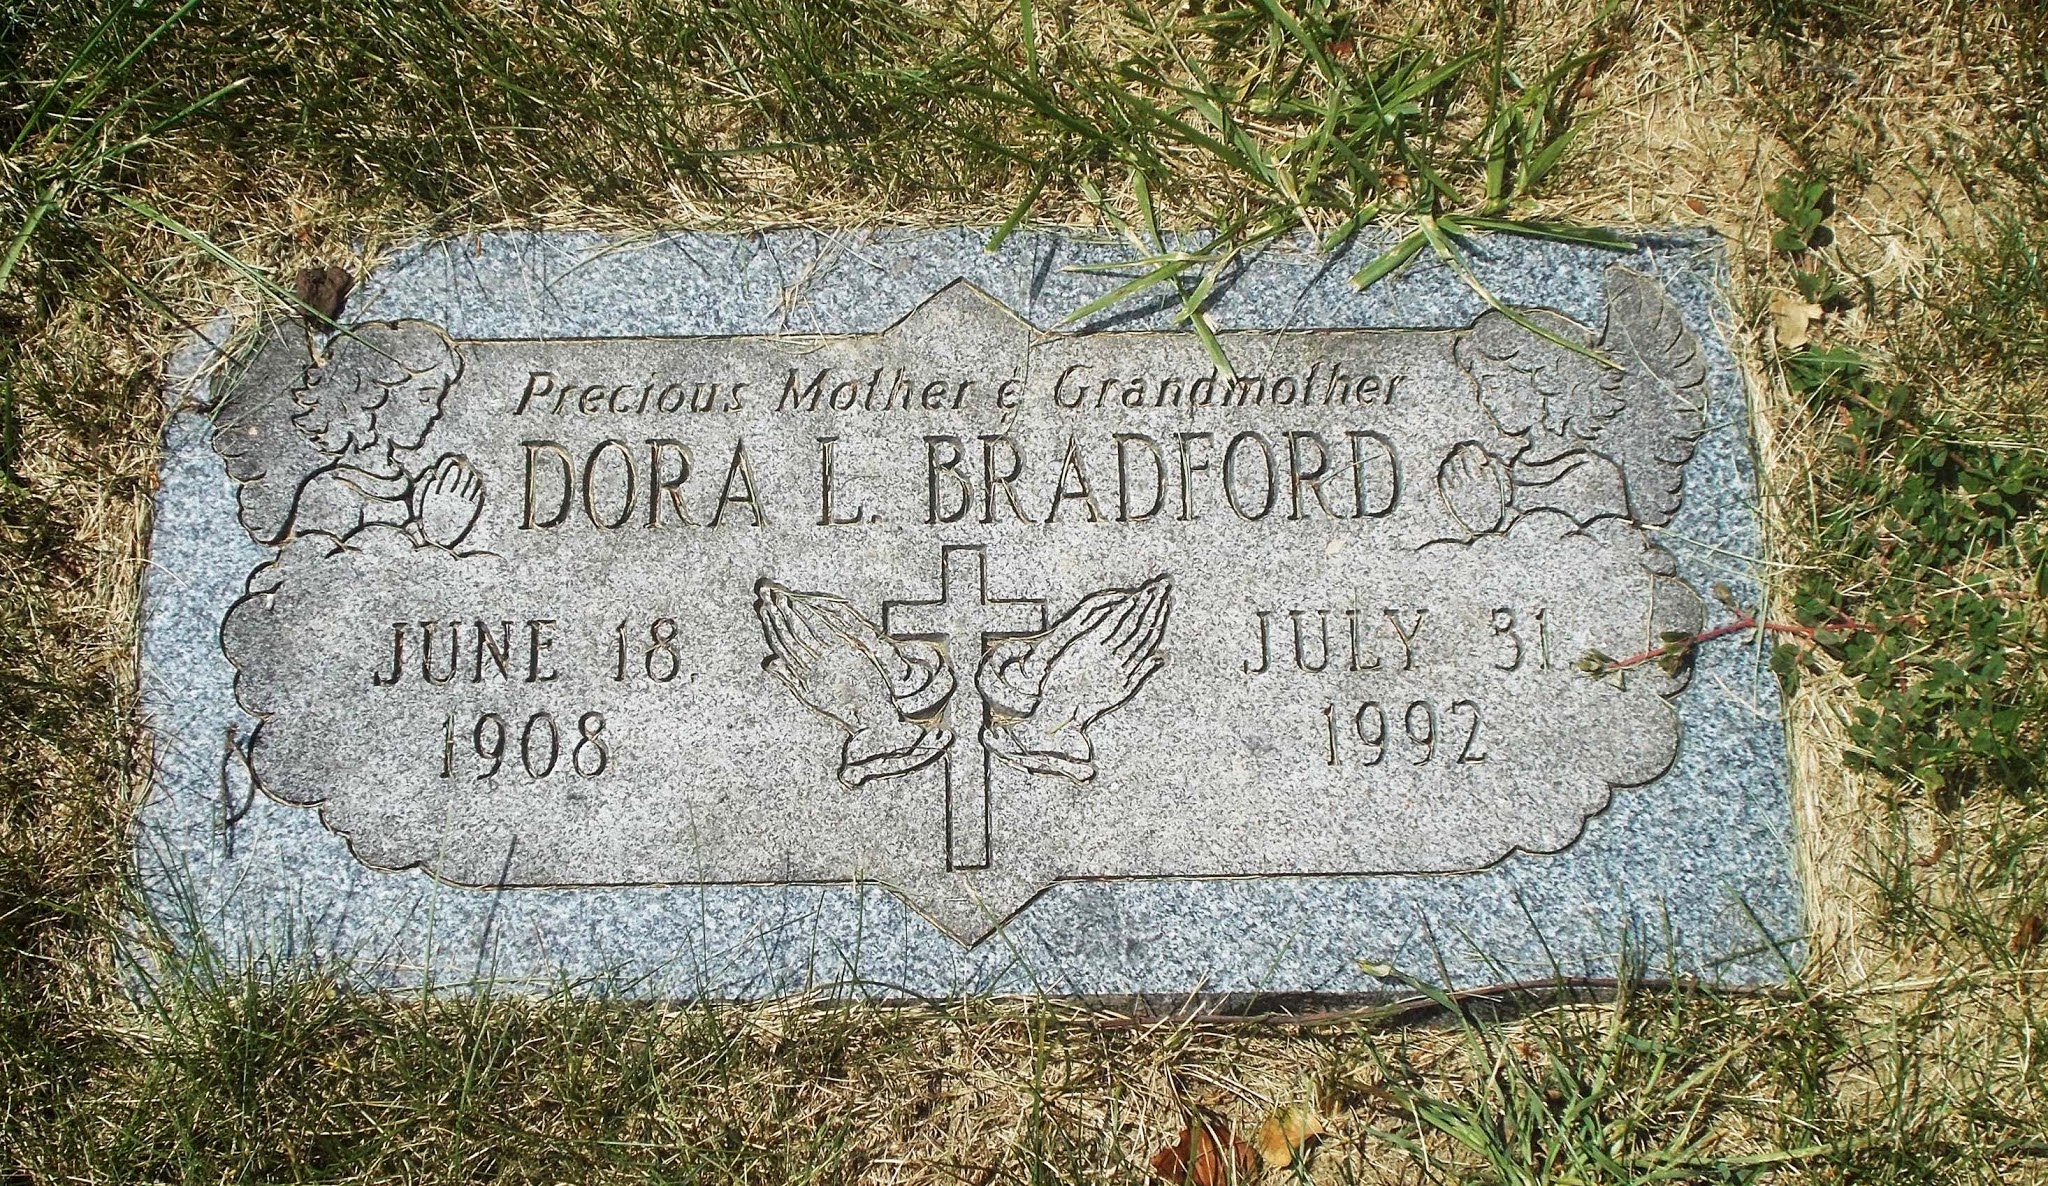 Dora L Bradford